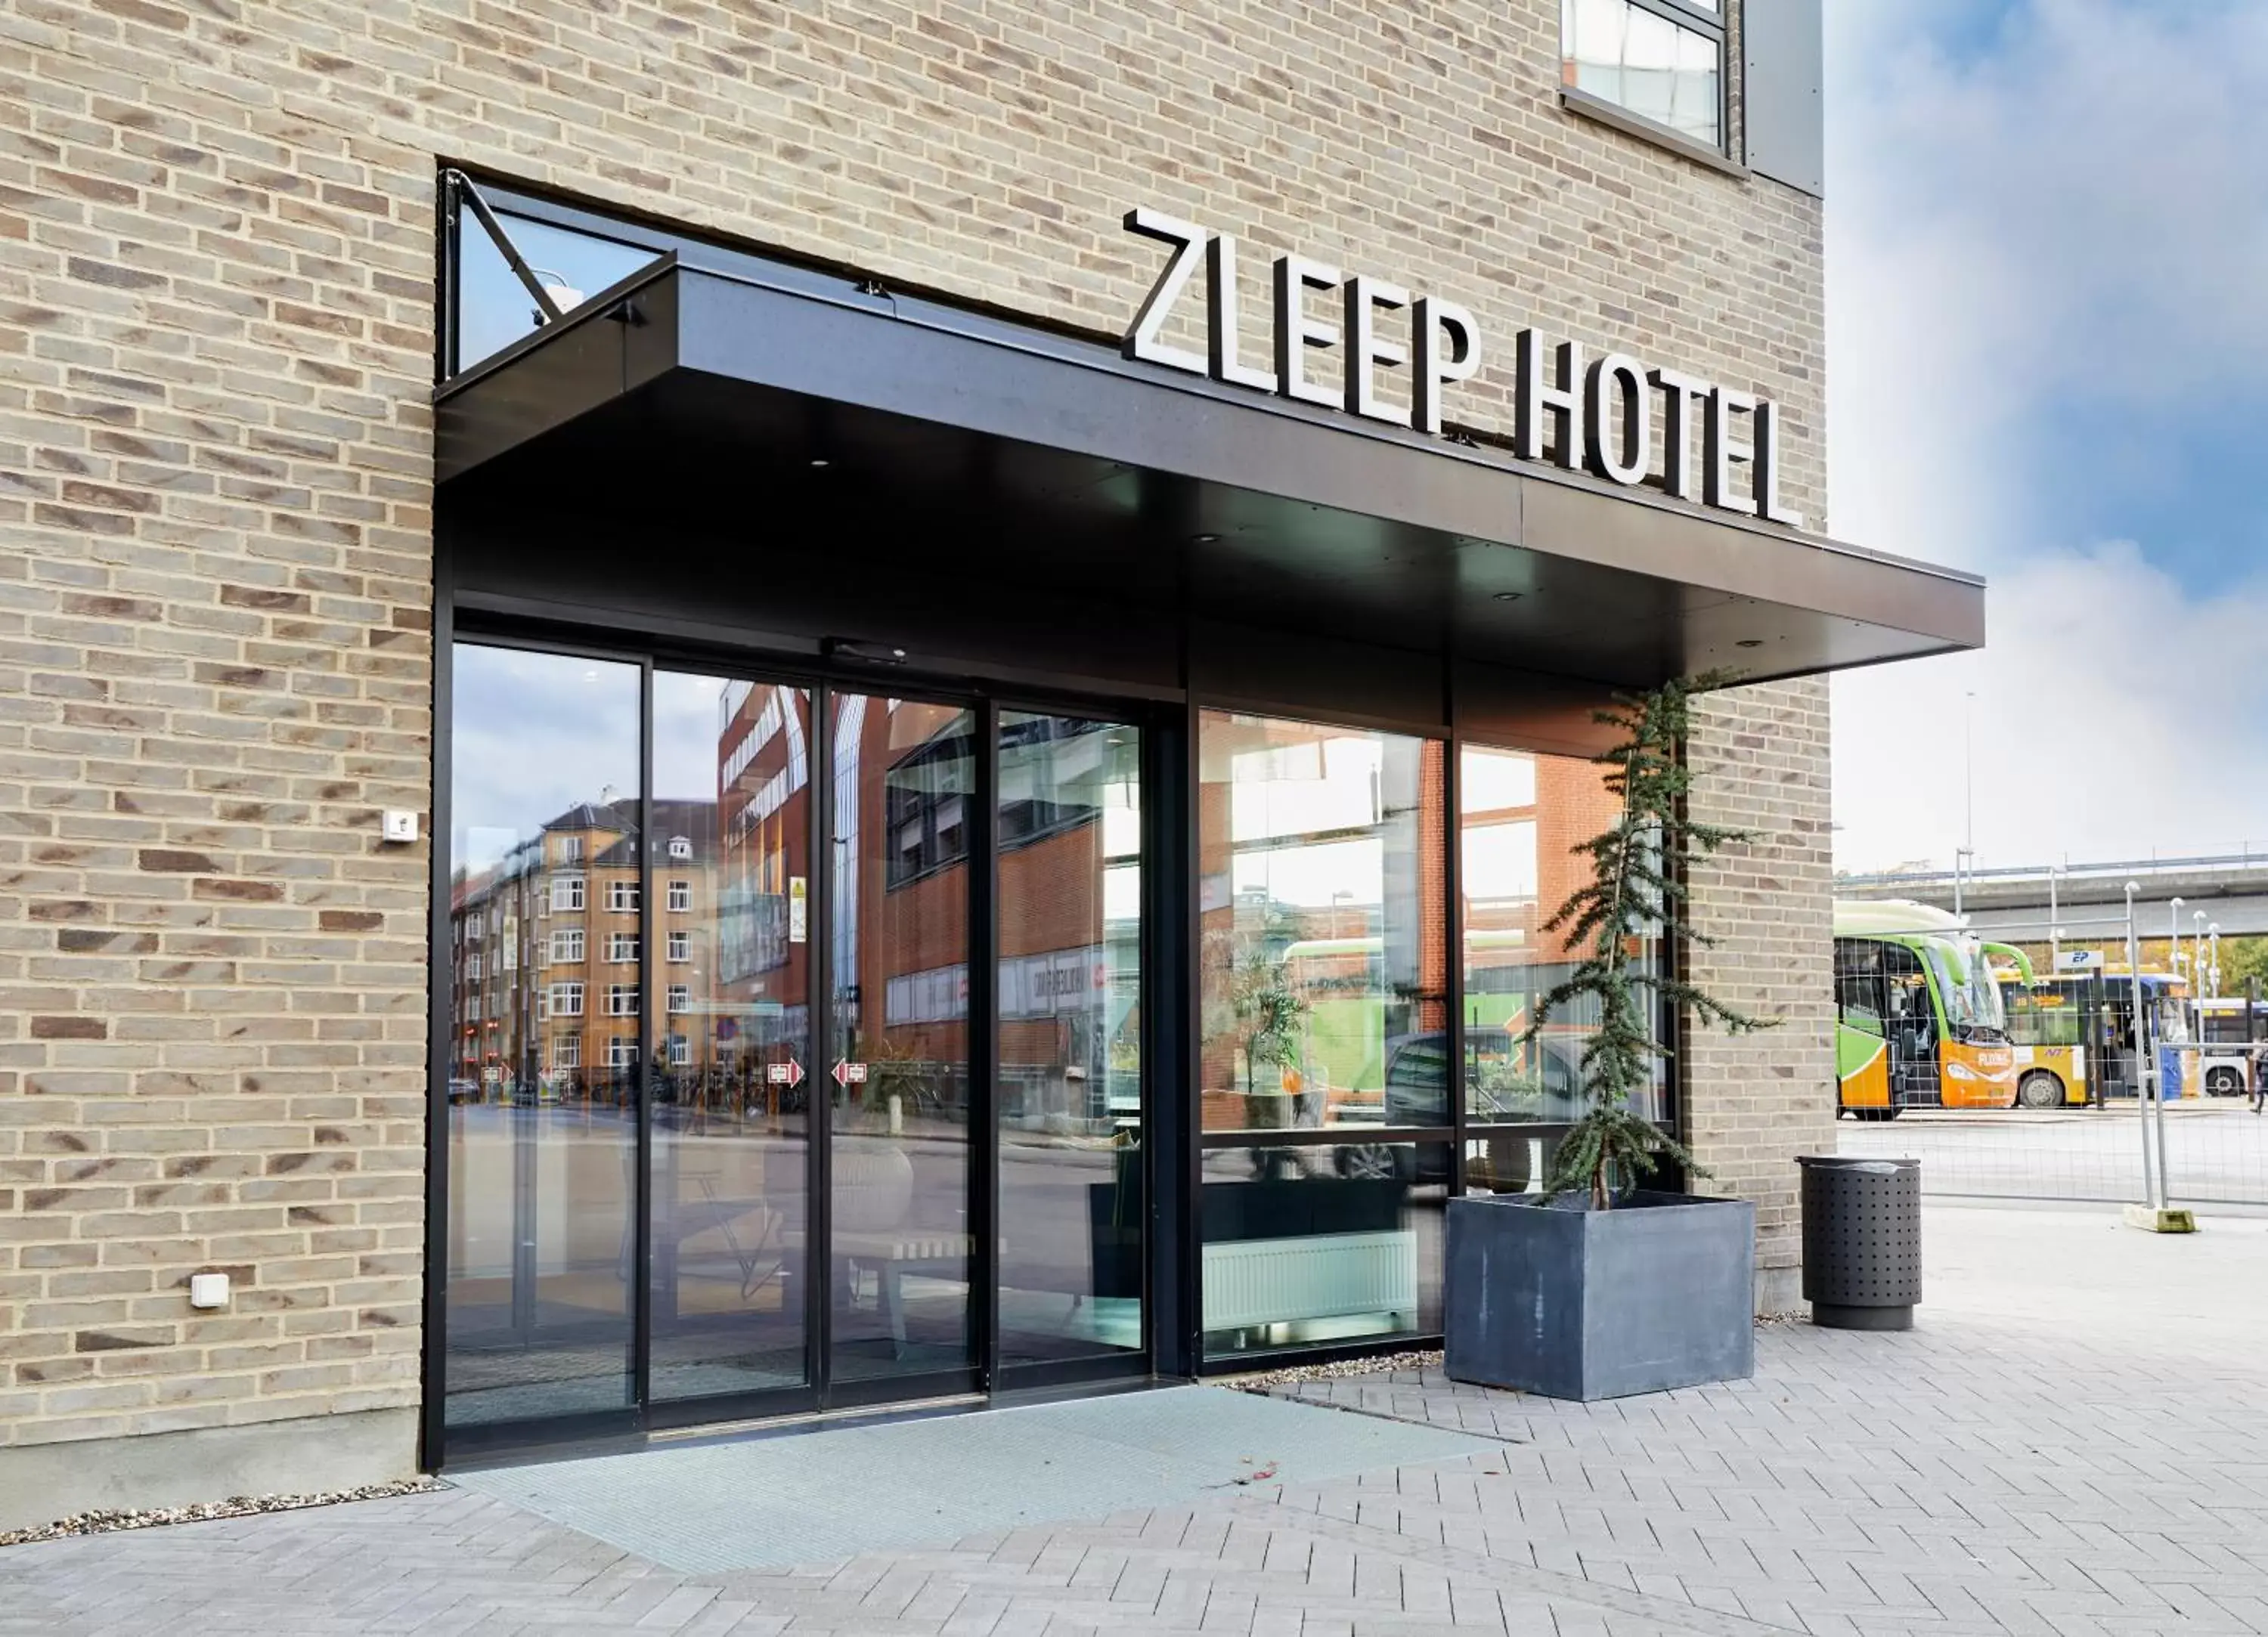 Property building in Zleep Hotel Aalborg